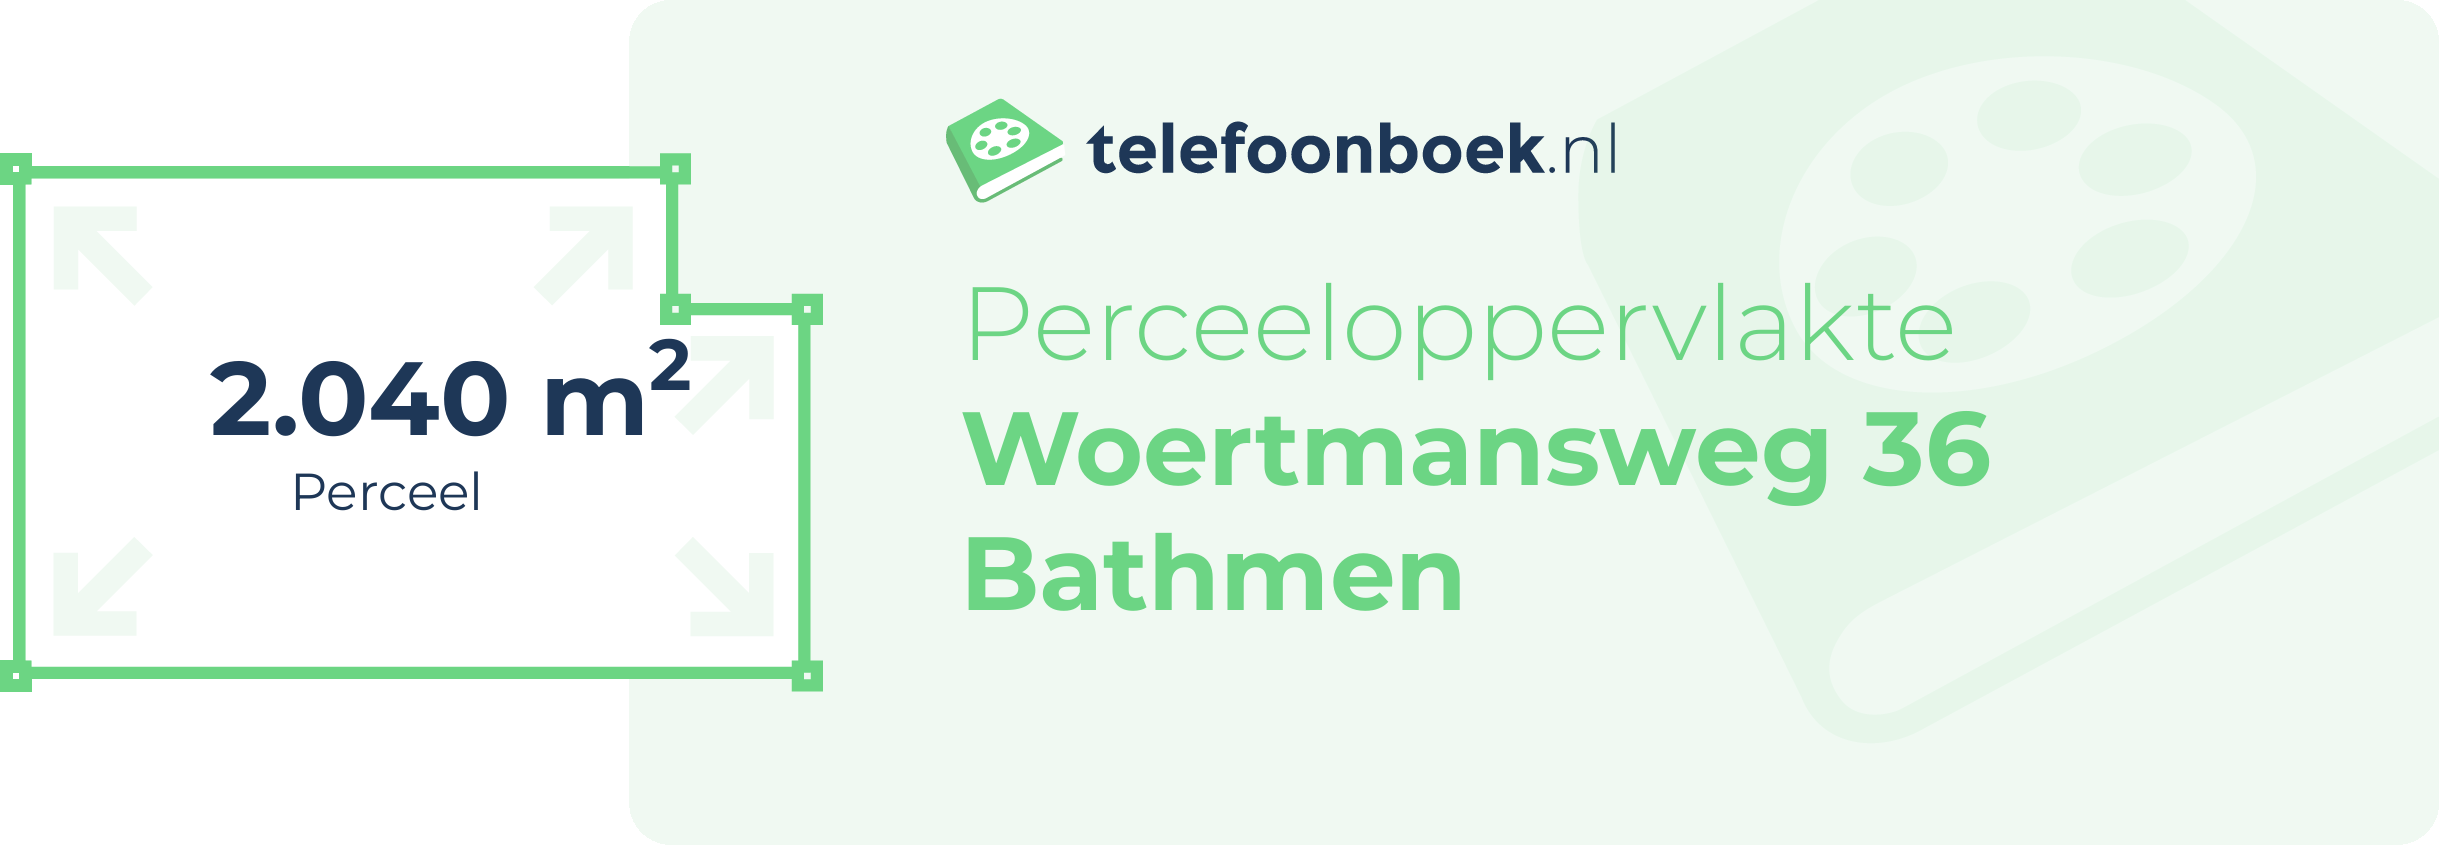 Perceeloppervlakte Woertmansweg 36 Bathmen